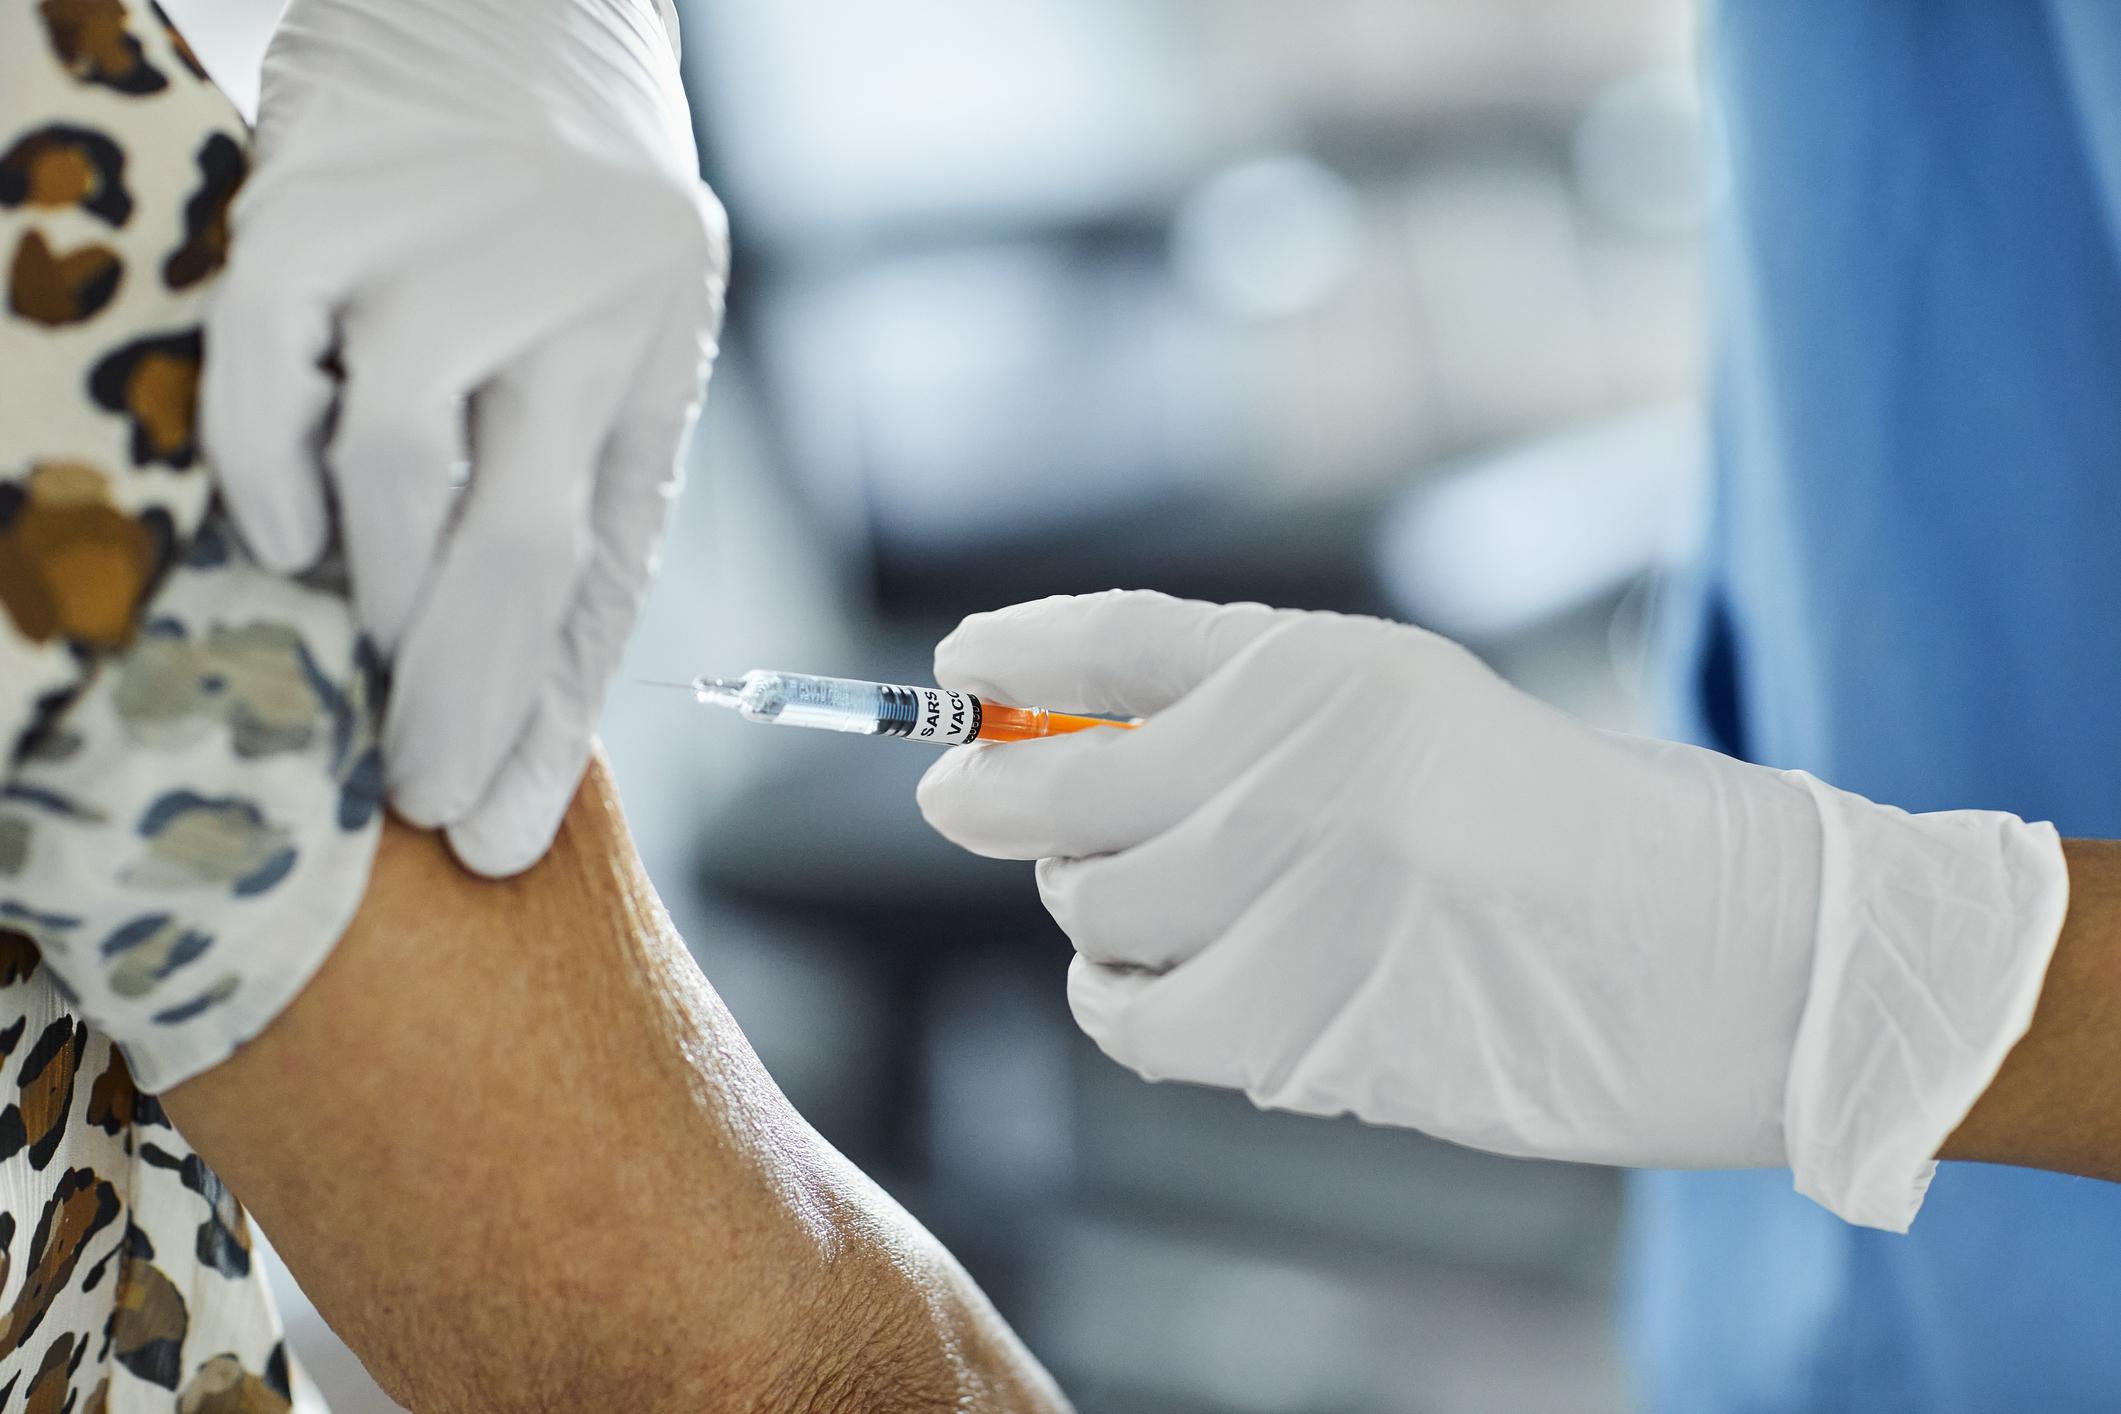 Ministério da Saúde recomenda tomar primeiro a vacina contra a Covid-19 e depois